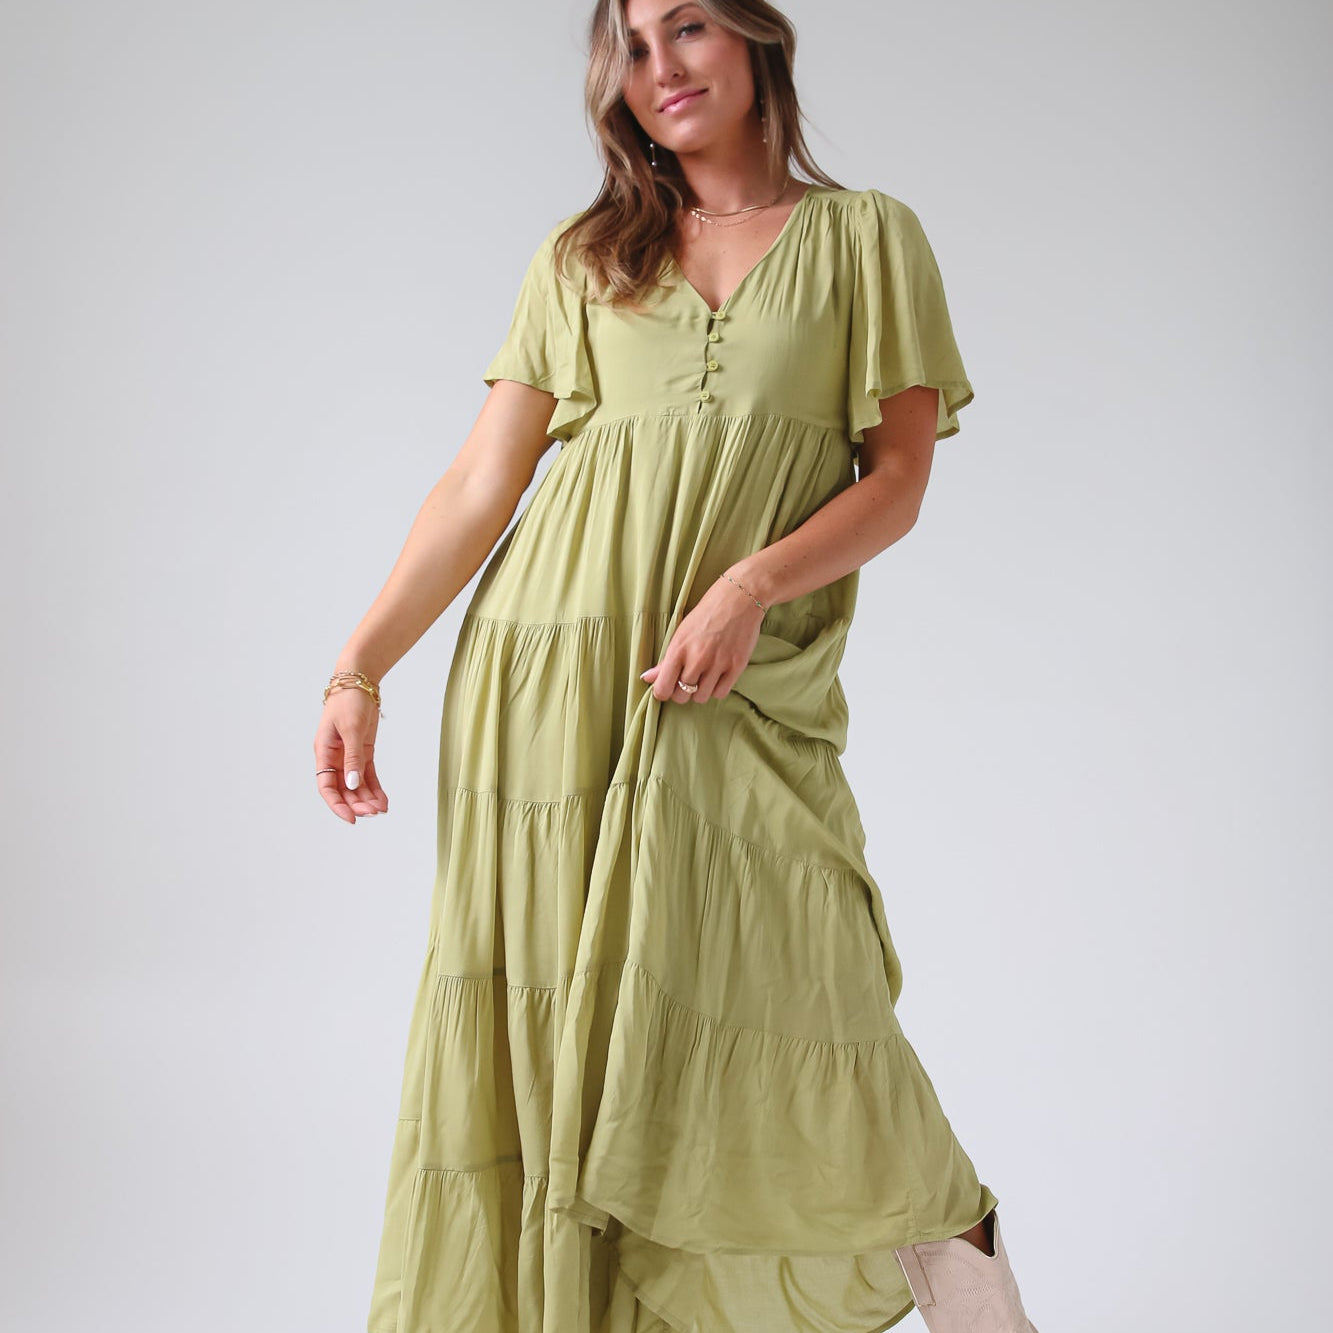 Pistachio green maternity maxi dress